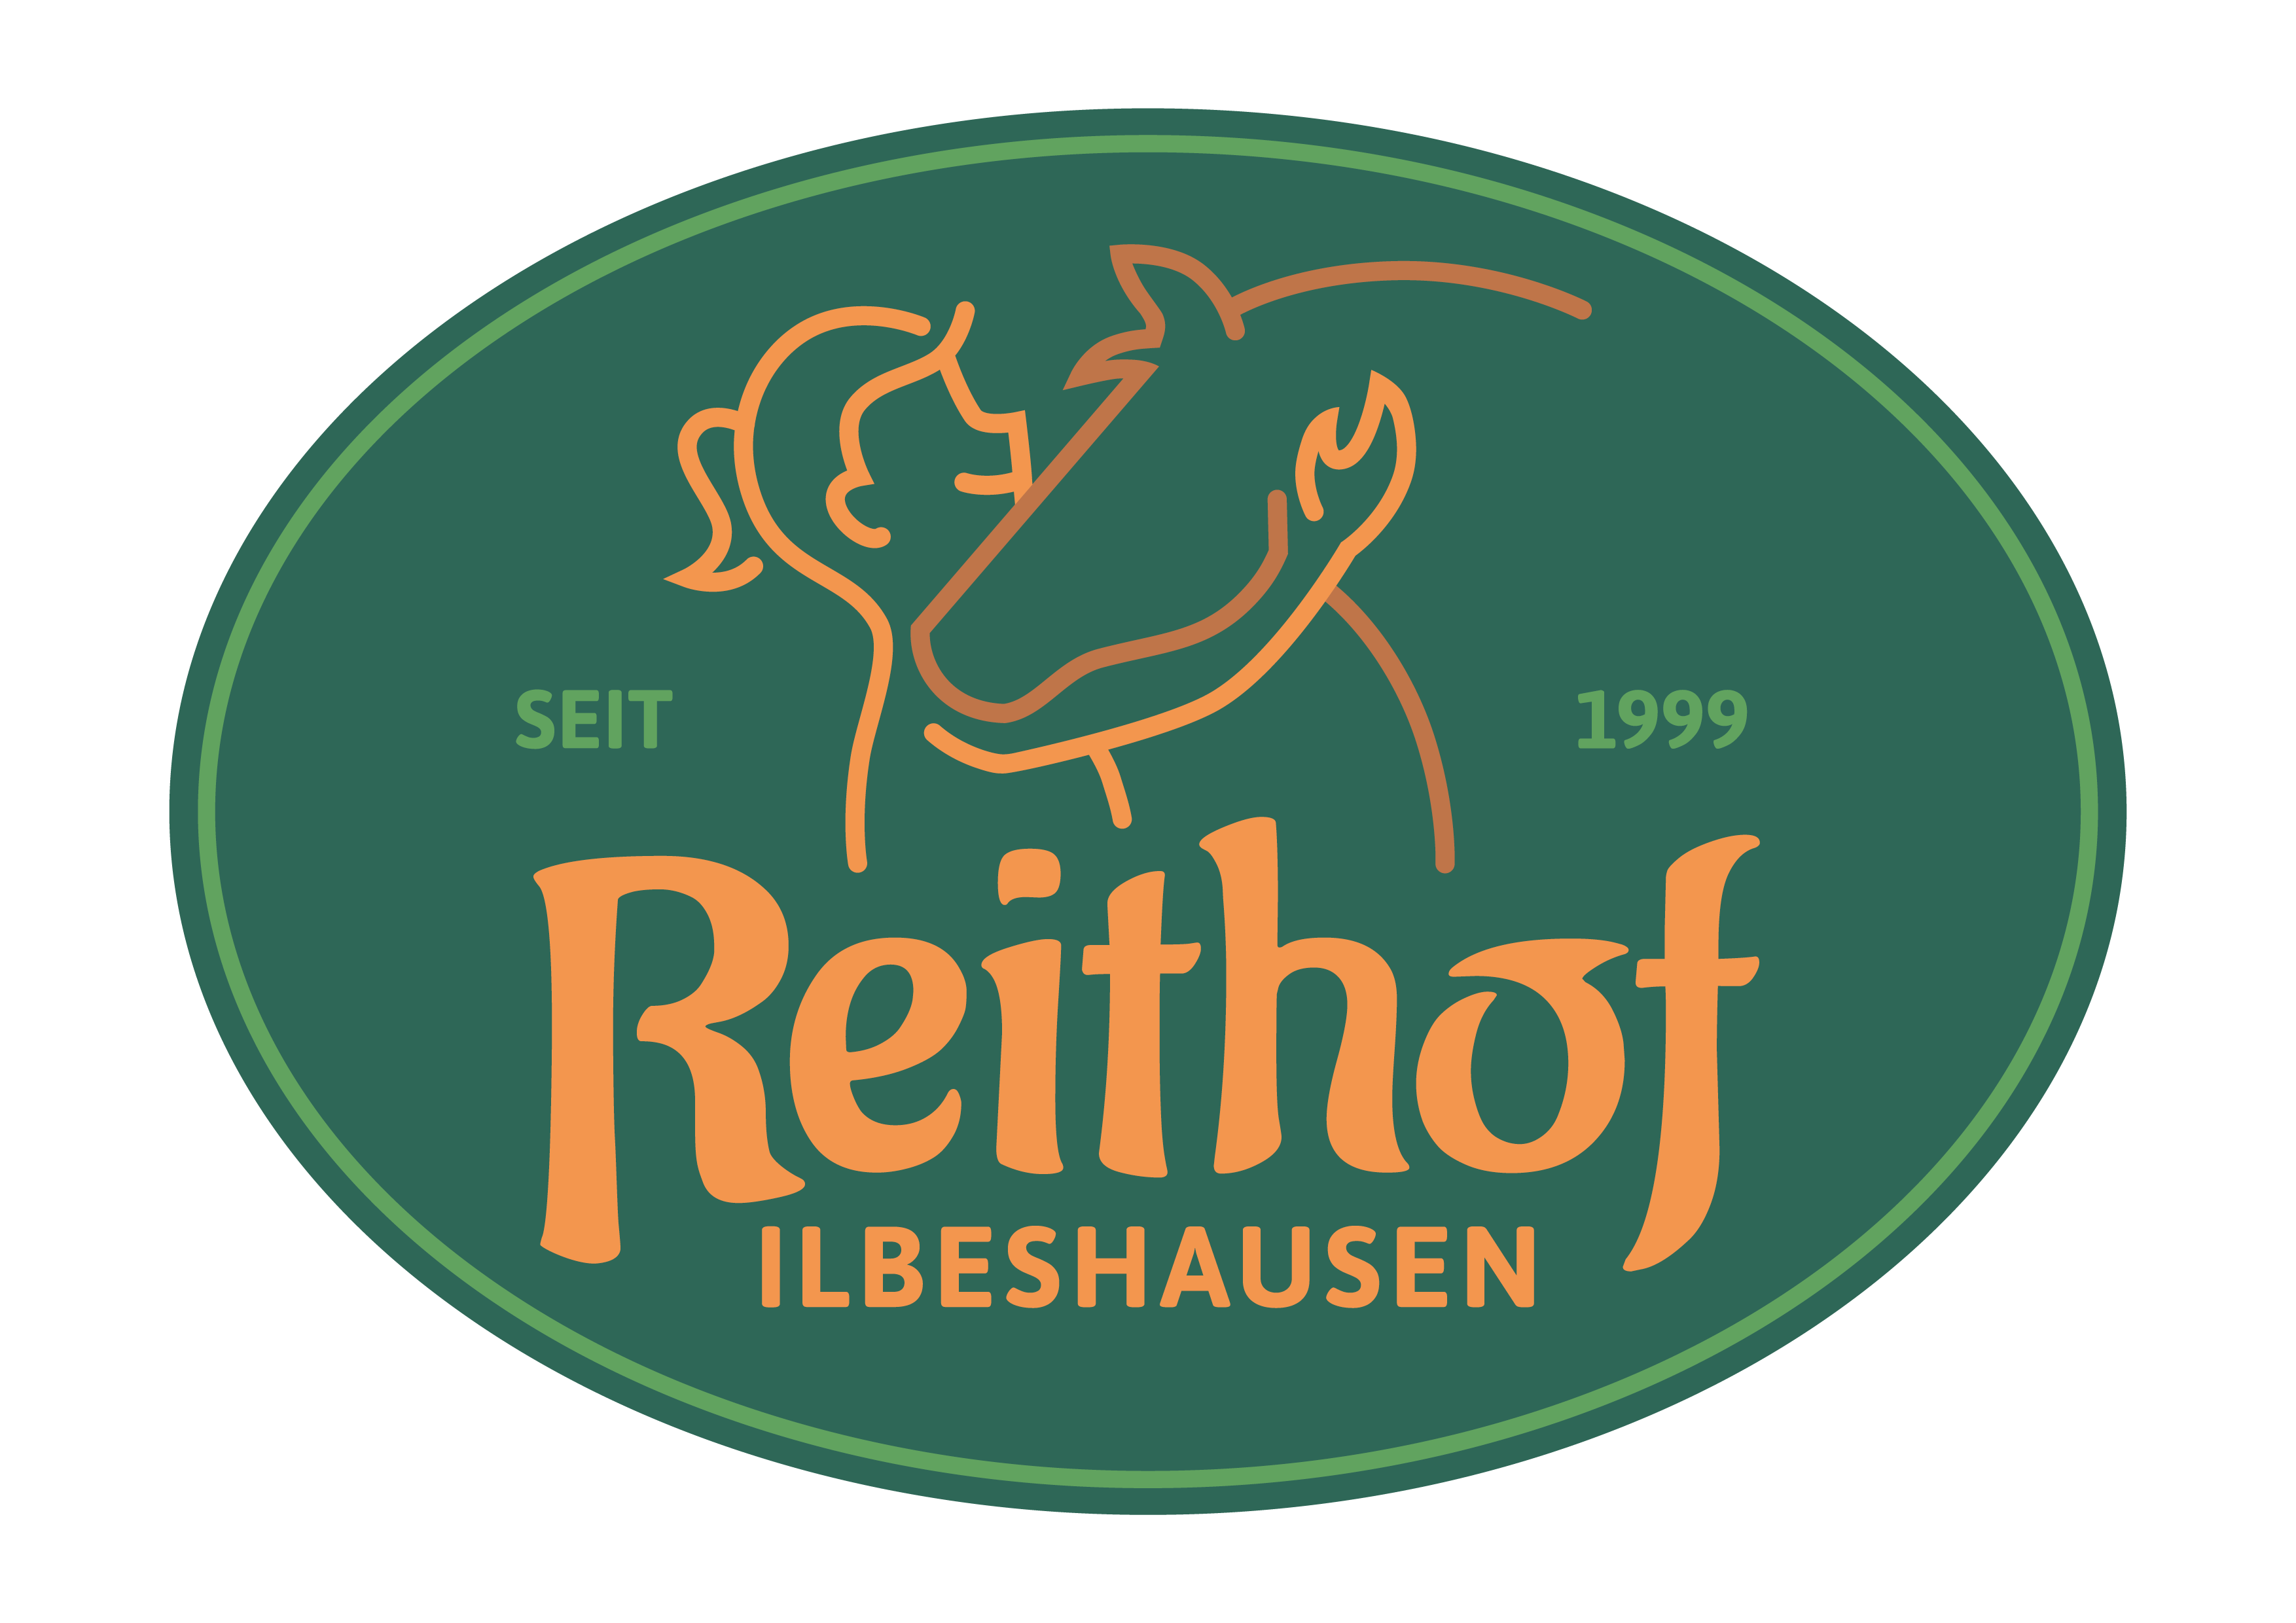 Reithof Ilbeshausen